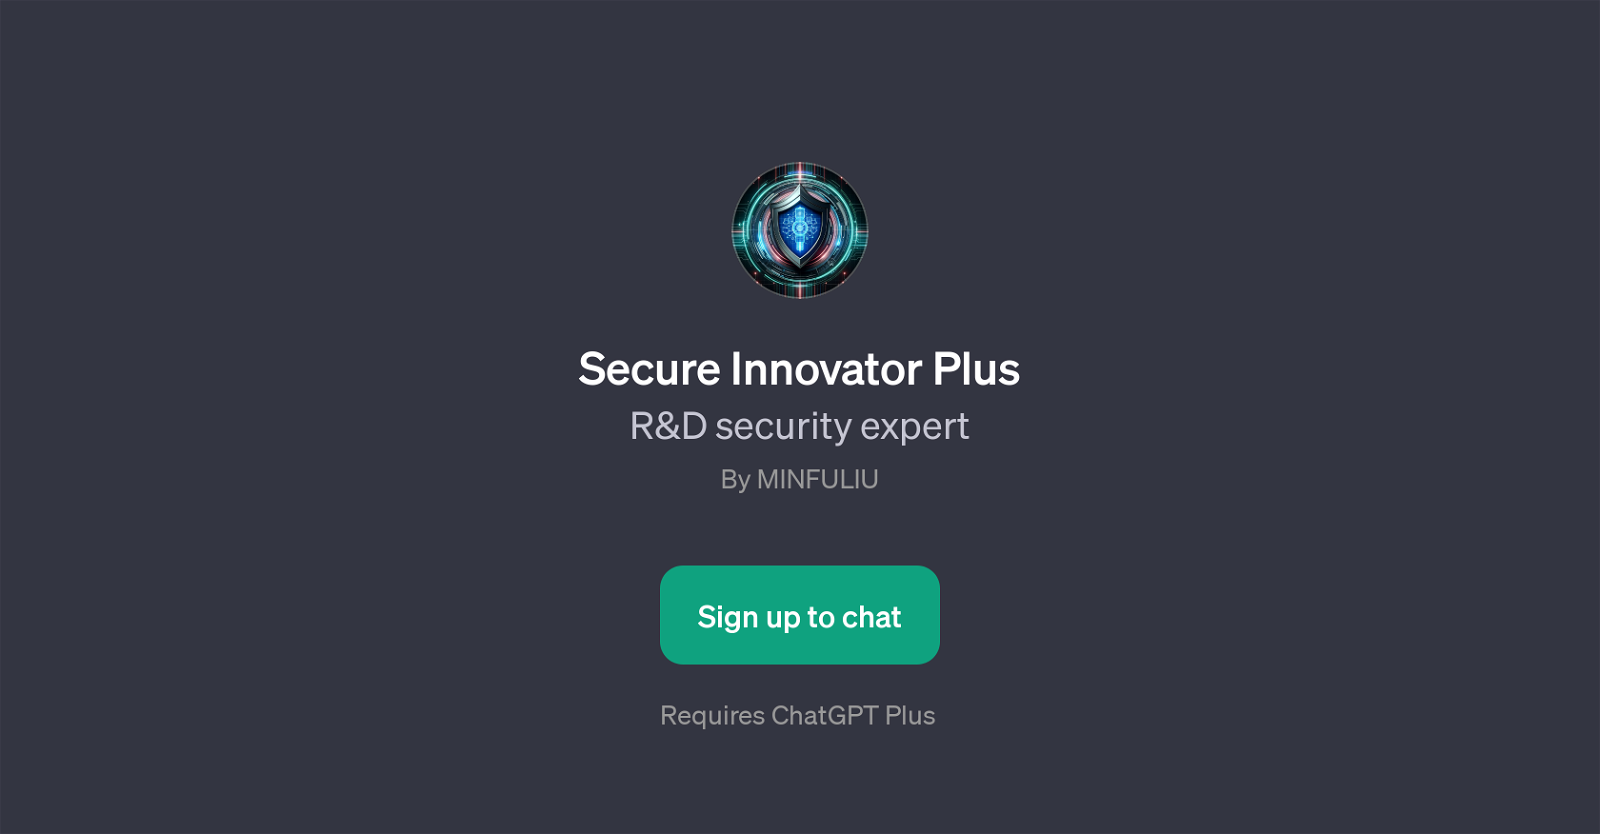 Secure Innovator Plus website